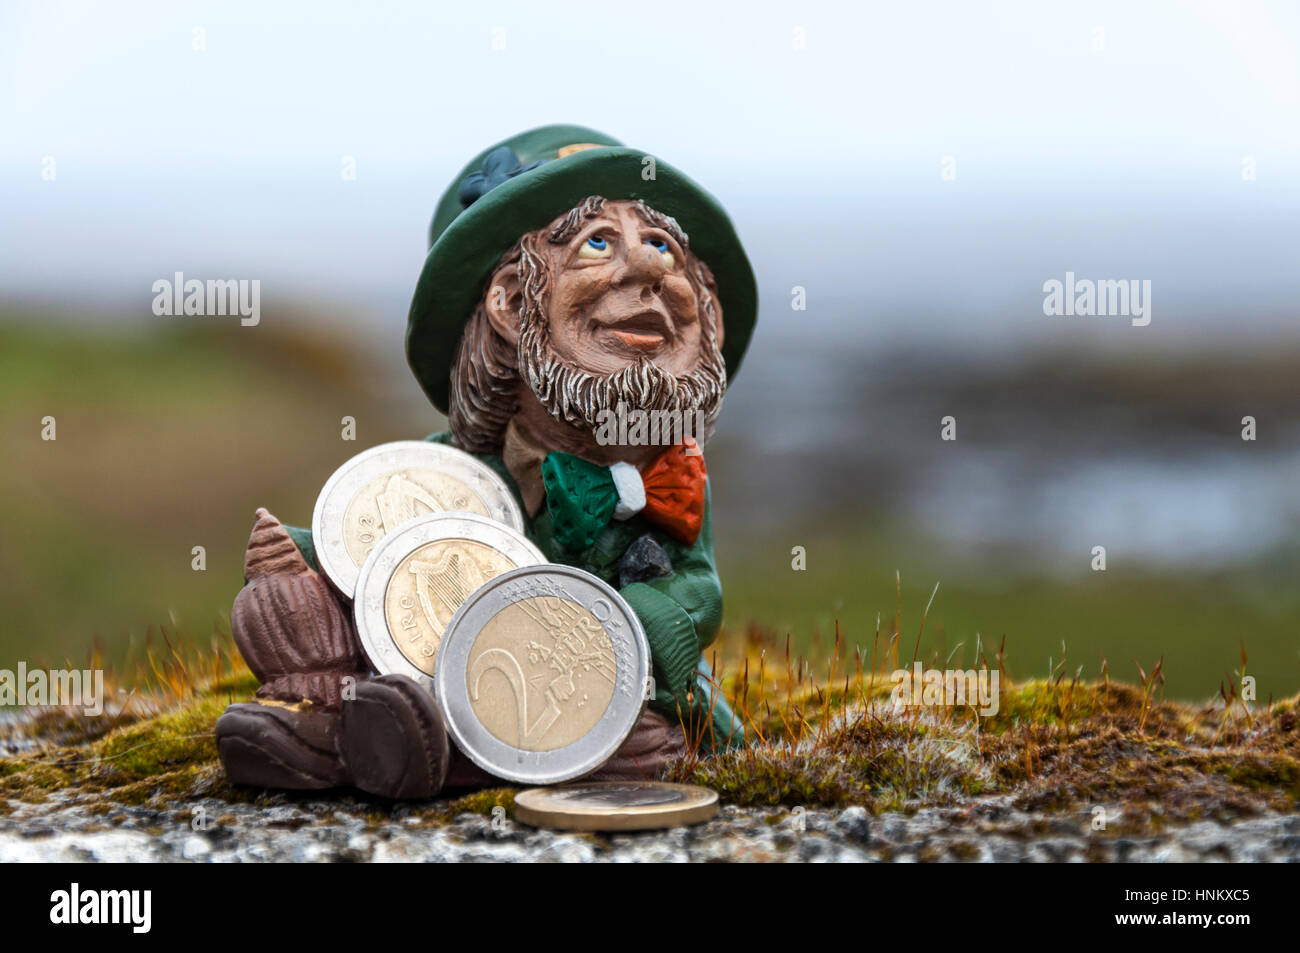 Ireland and the Euro currency money concept with leprechaun economics Stock Photo